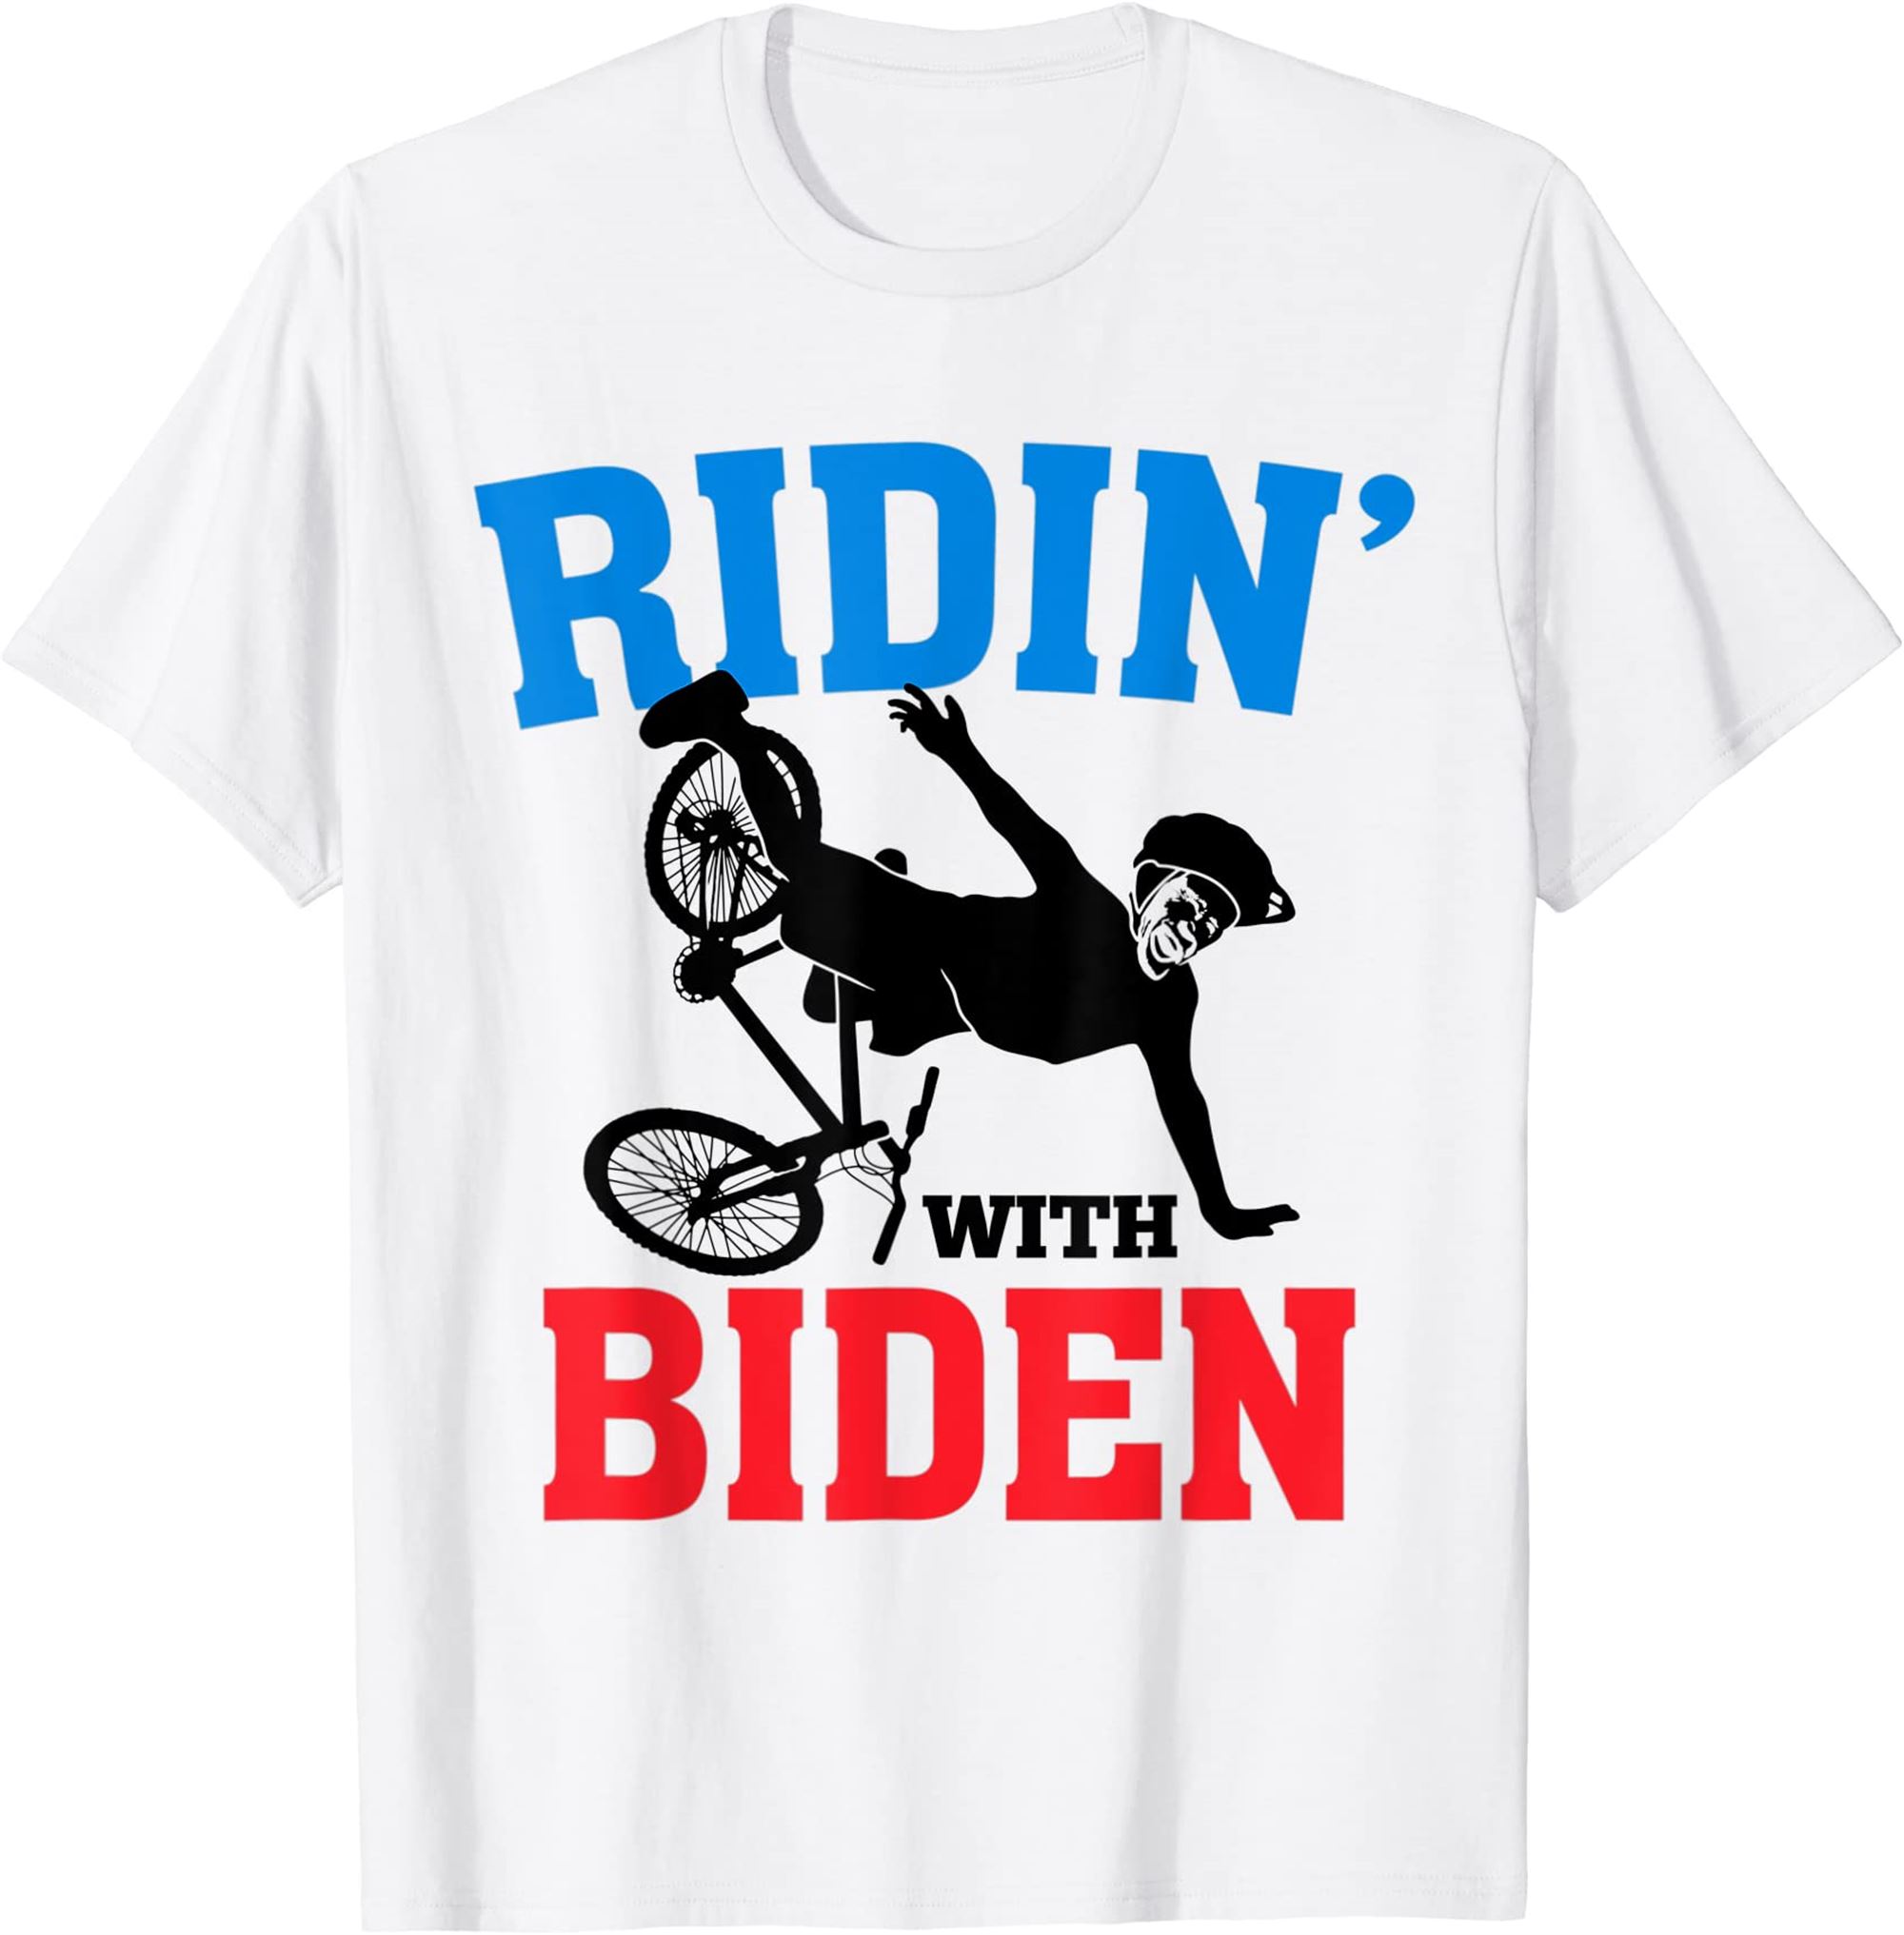 Joe Biden Falling With Biden Funny Ridin With Biden T-shirt Plus Size Up To 5xl